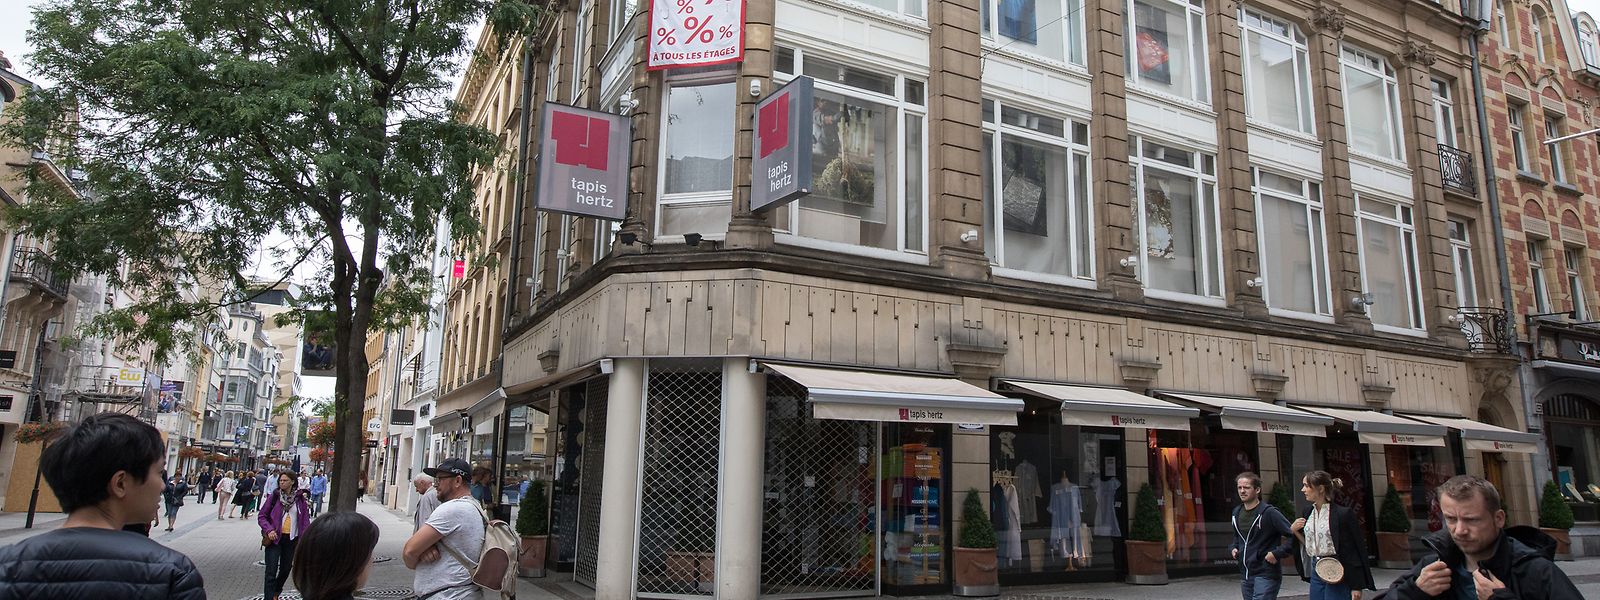 Das Teppichgeschäft Tapis Herty befand sich seit 1981 an der Ecke Grand-Rue/Rue des Capucins.